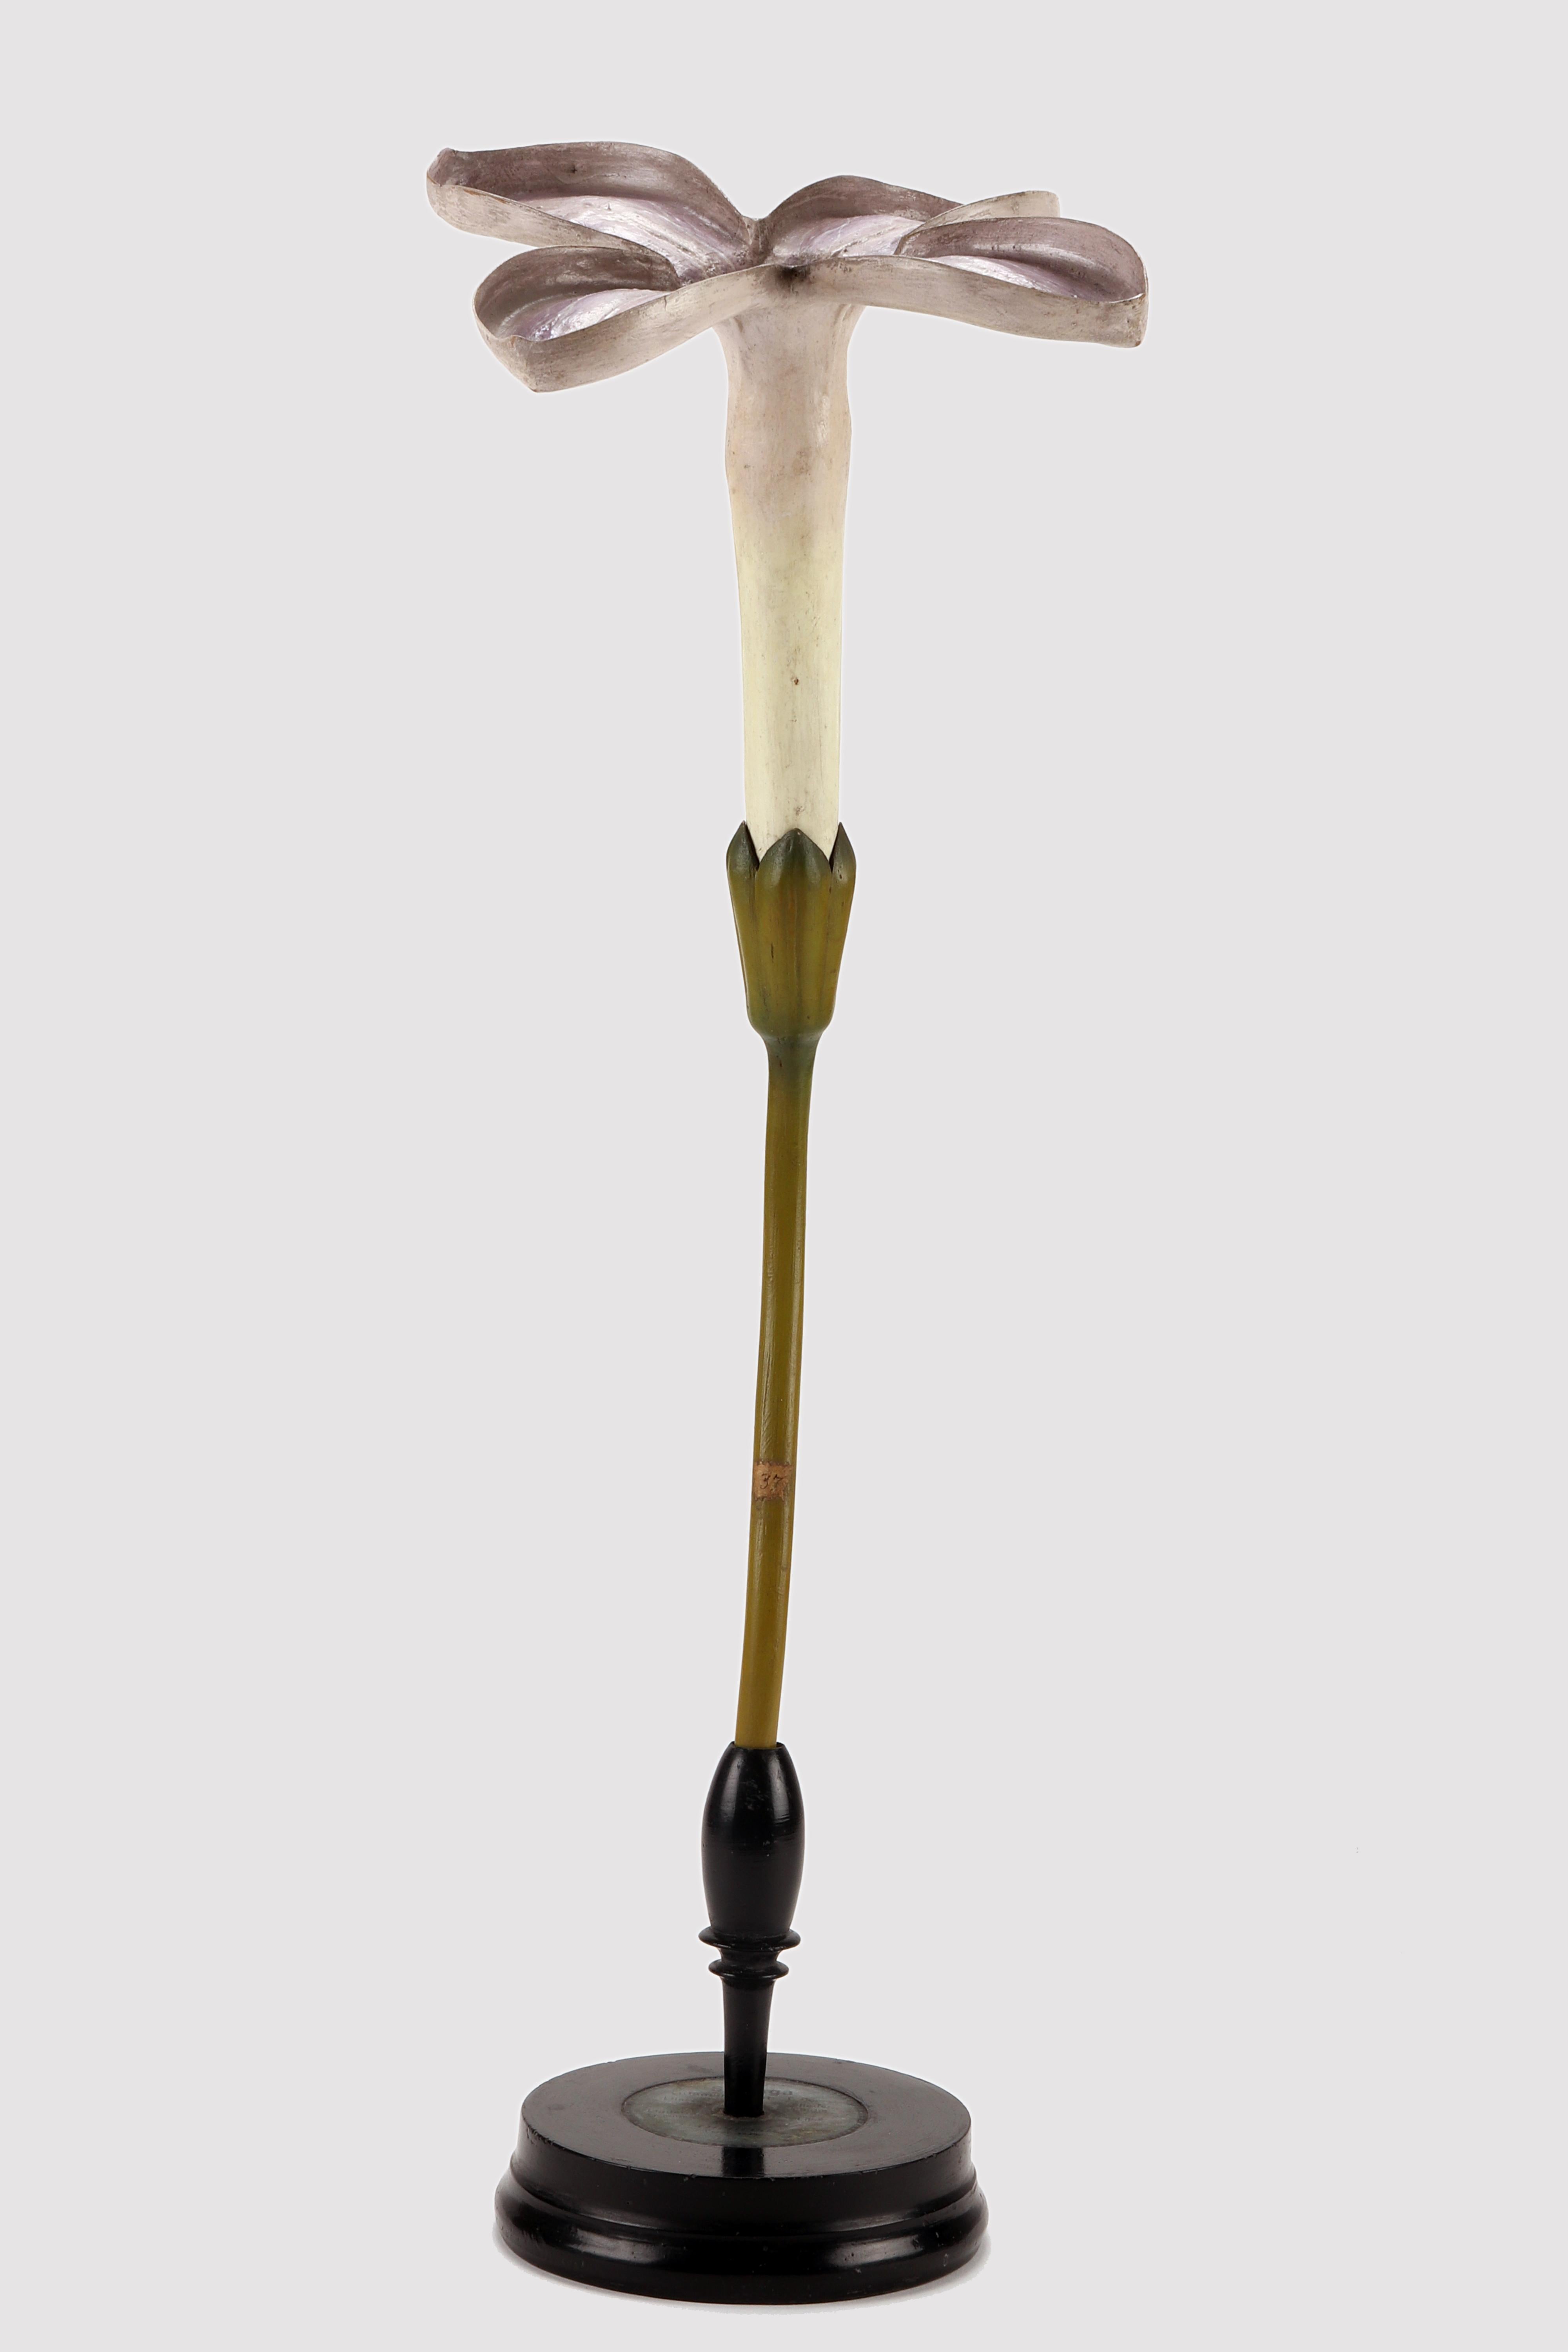 A rare botanical model of the Brendel, Syringa vulgaris N. 37 (Uleaceae). The round base in ebonized wood holds the botanical model which reveals the flower of the Lilac. Brendel, Berlin Germany, circa 1890.